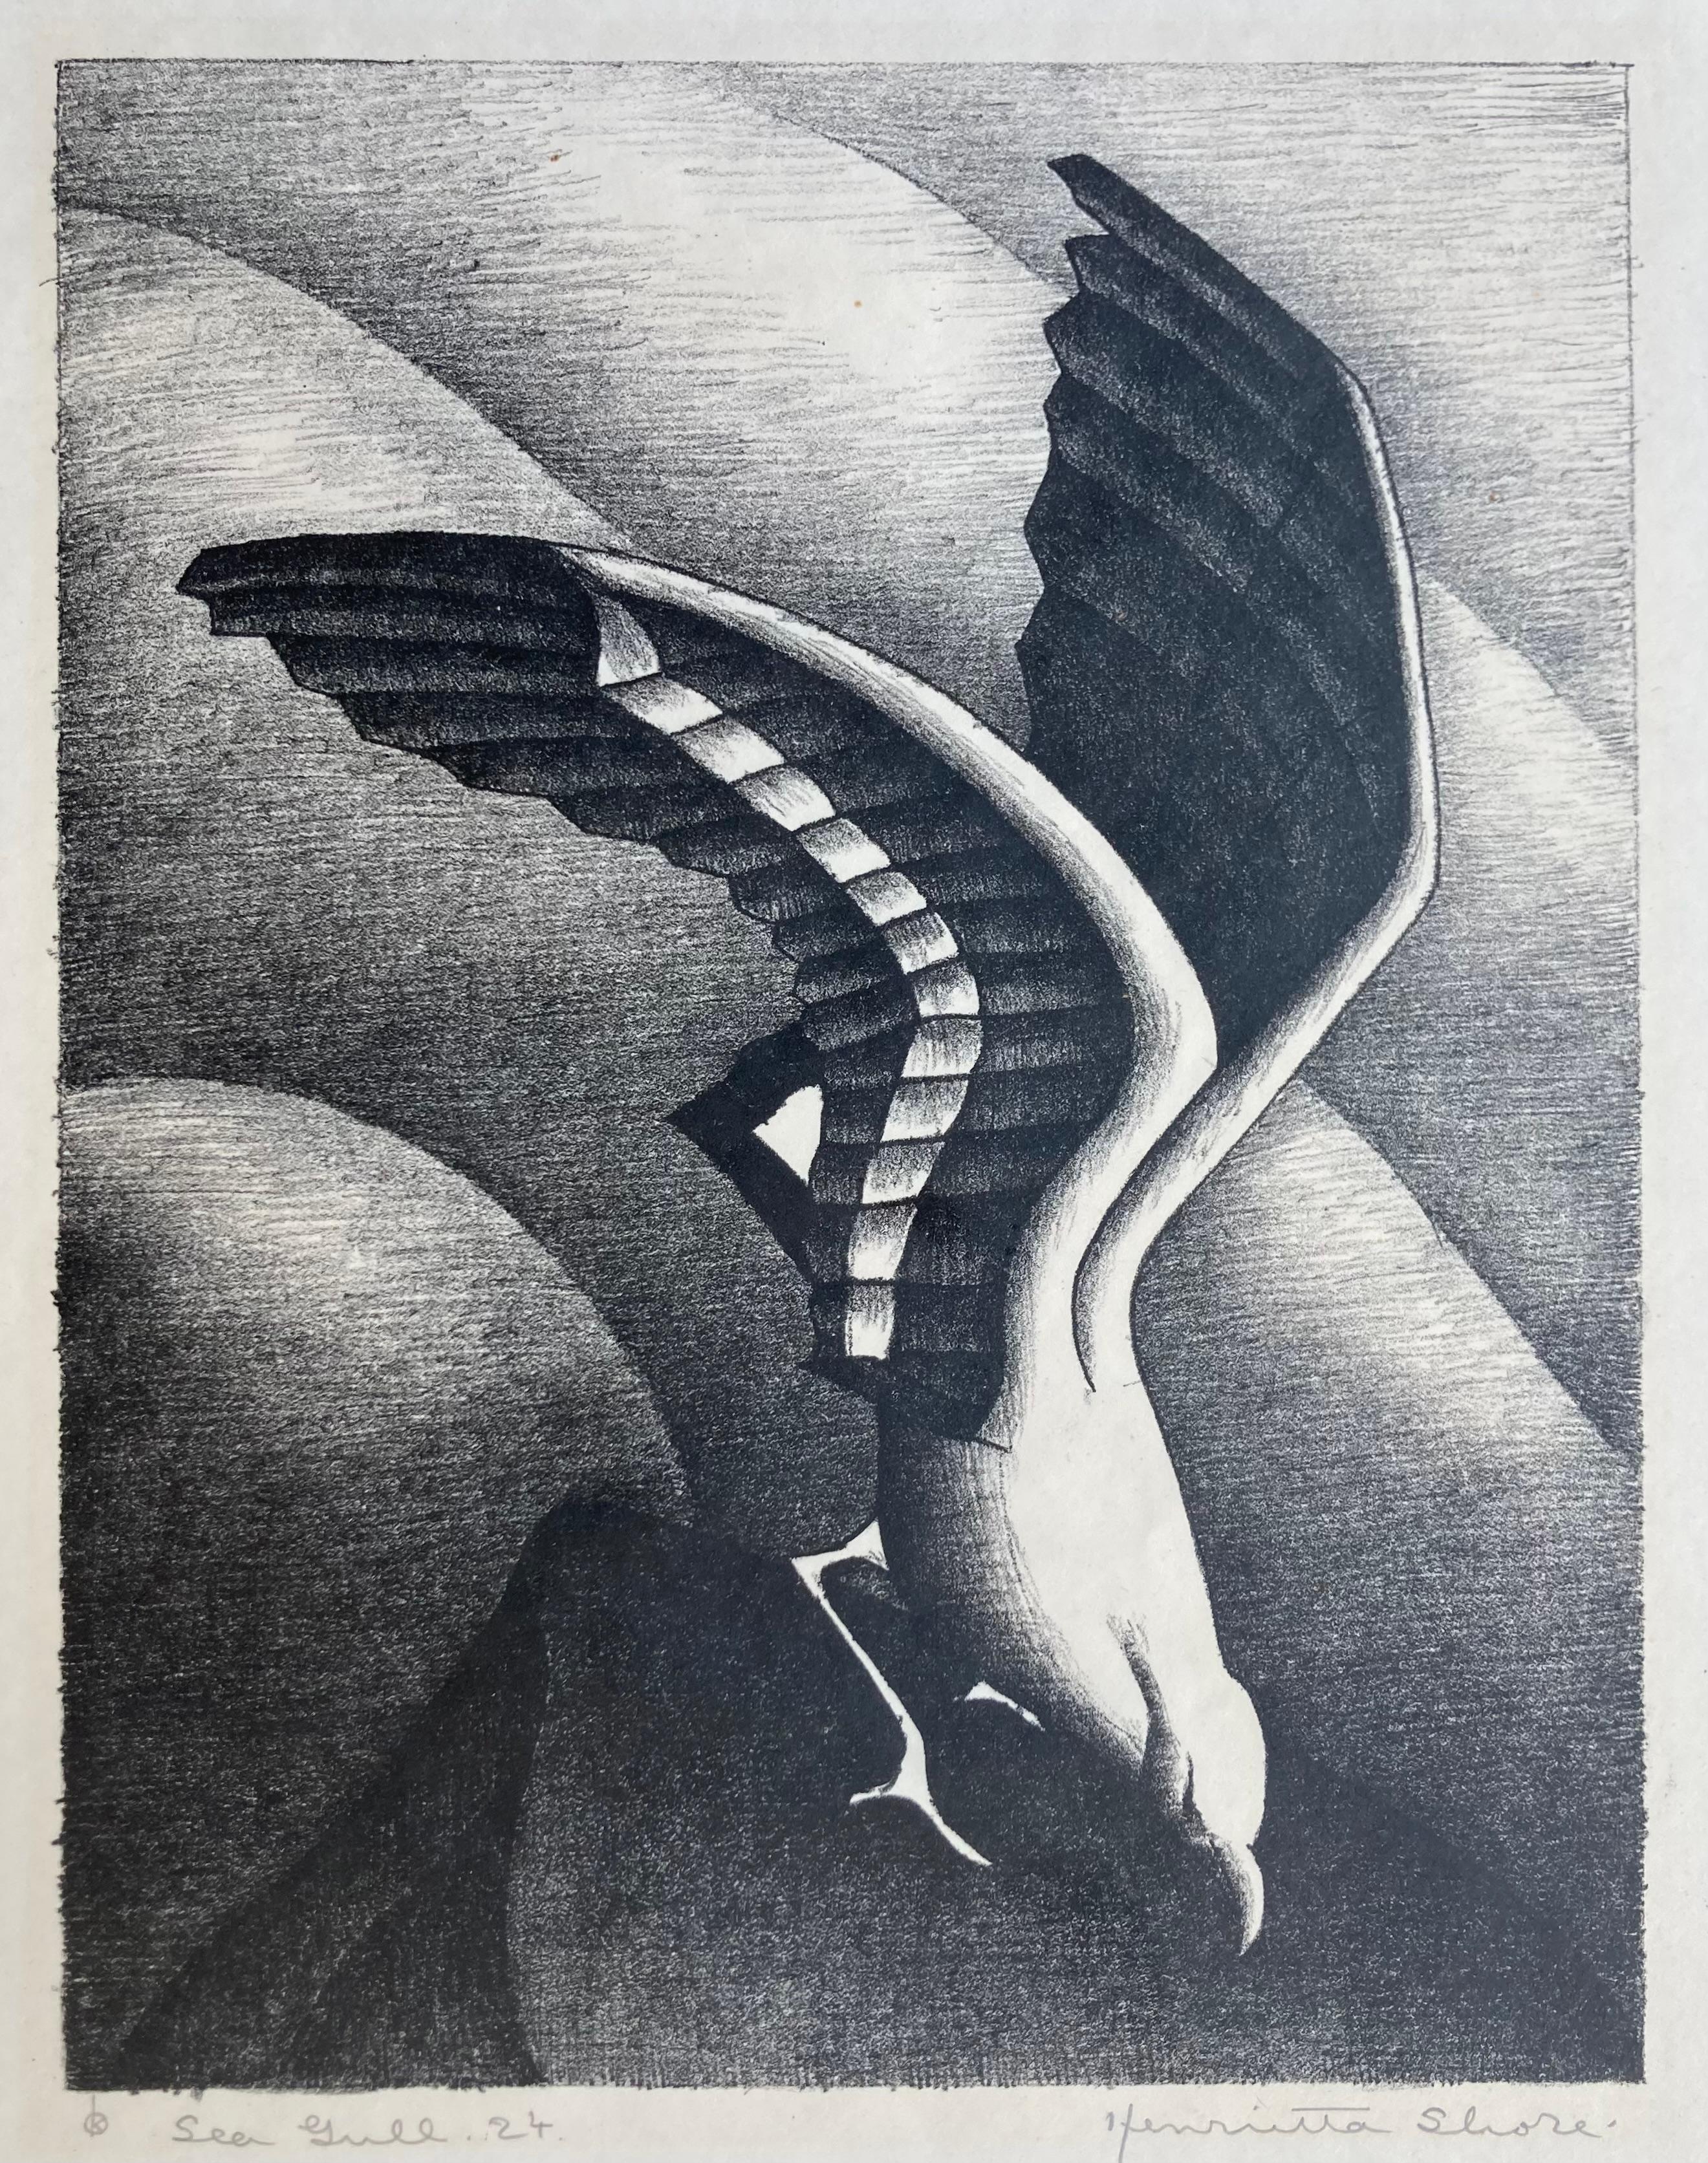 Sea Gull - Print by Henrietta Shore